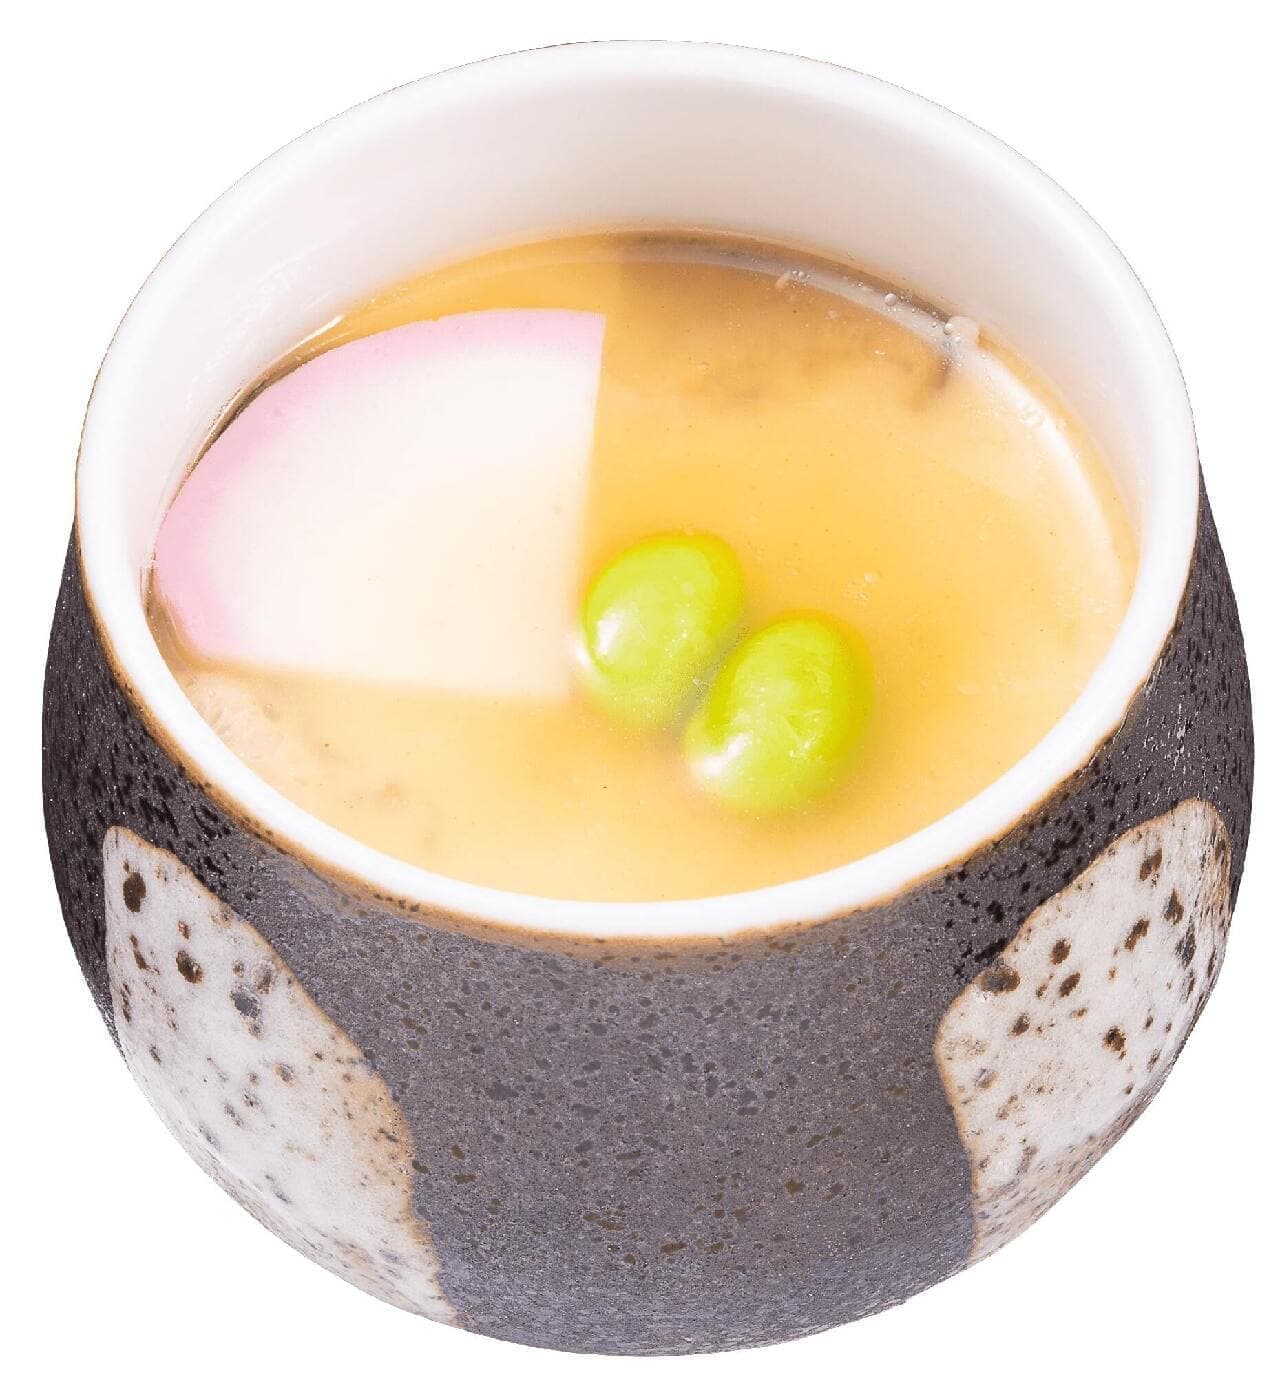 Kappa Sushi "Chawanmushi" (cold steamed egg custard) prepared in the restaurant